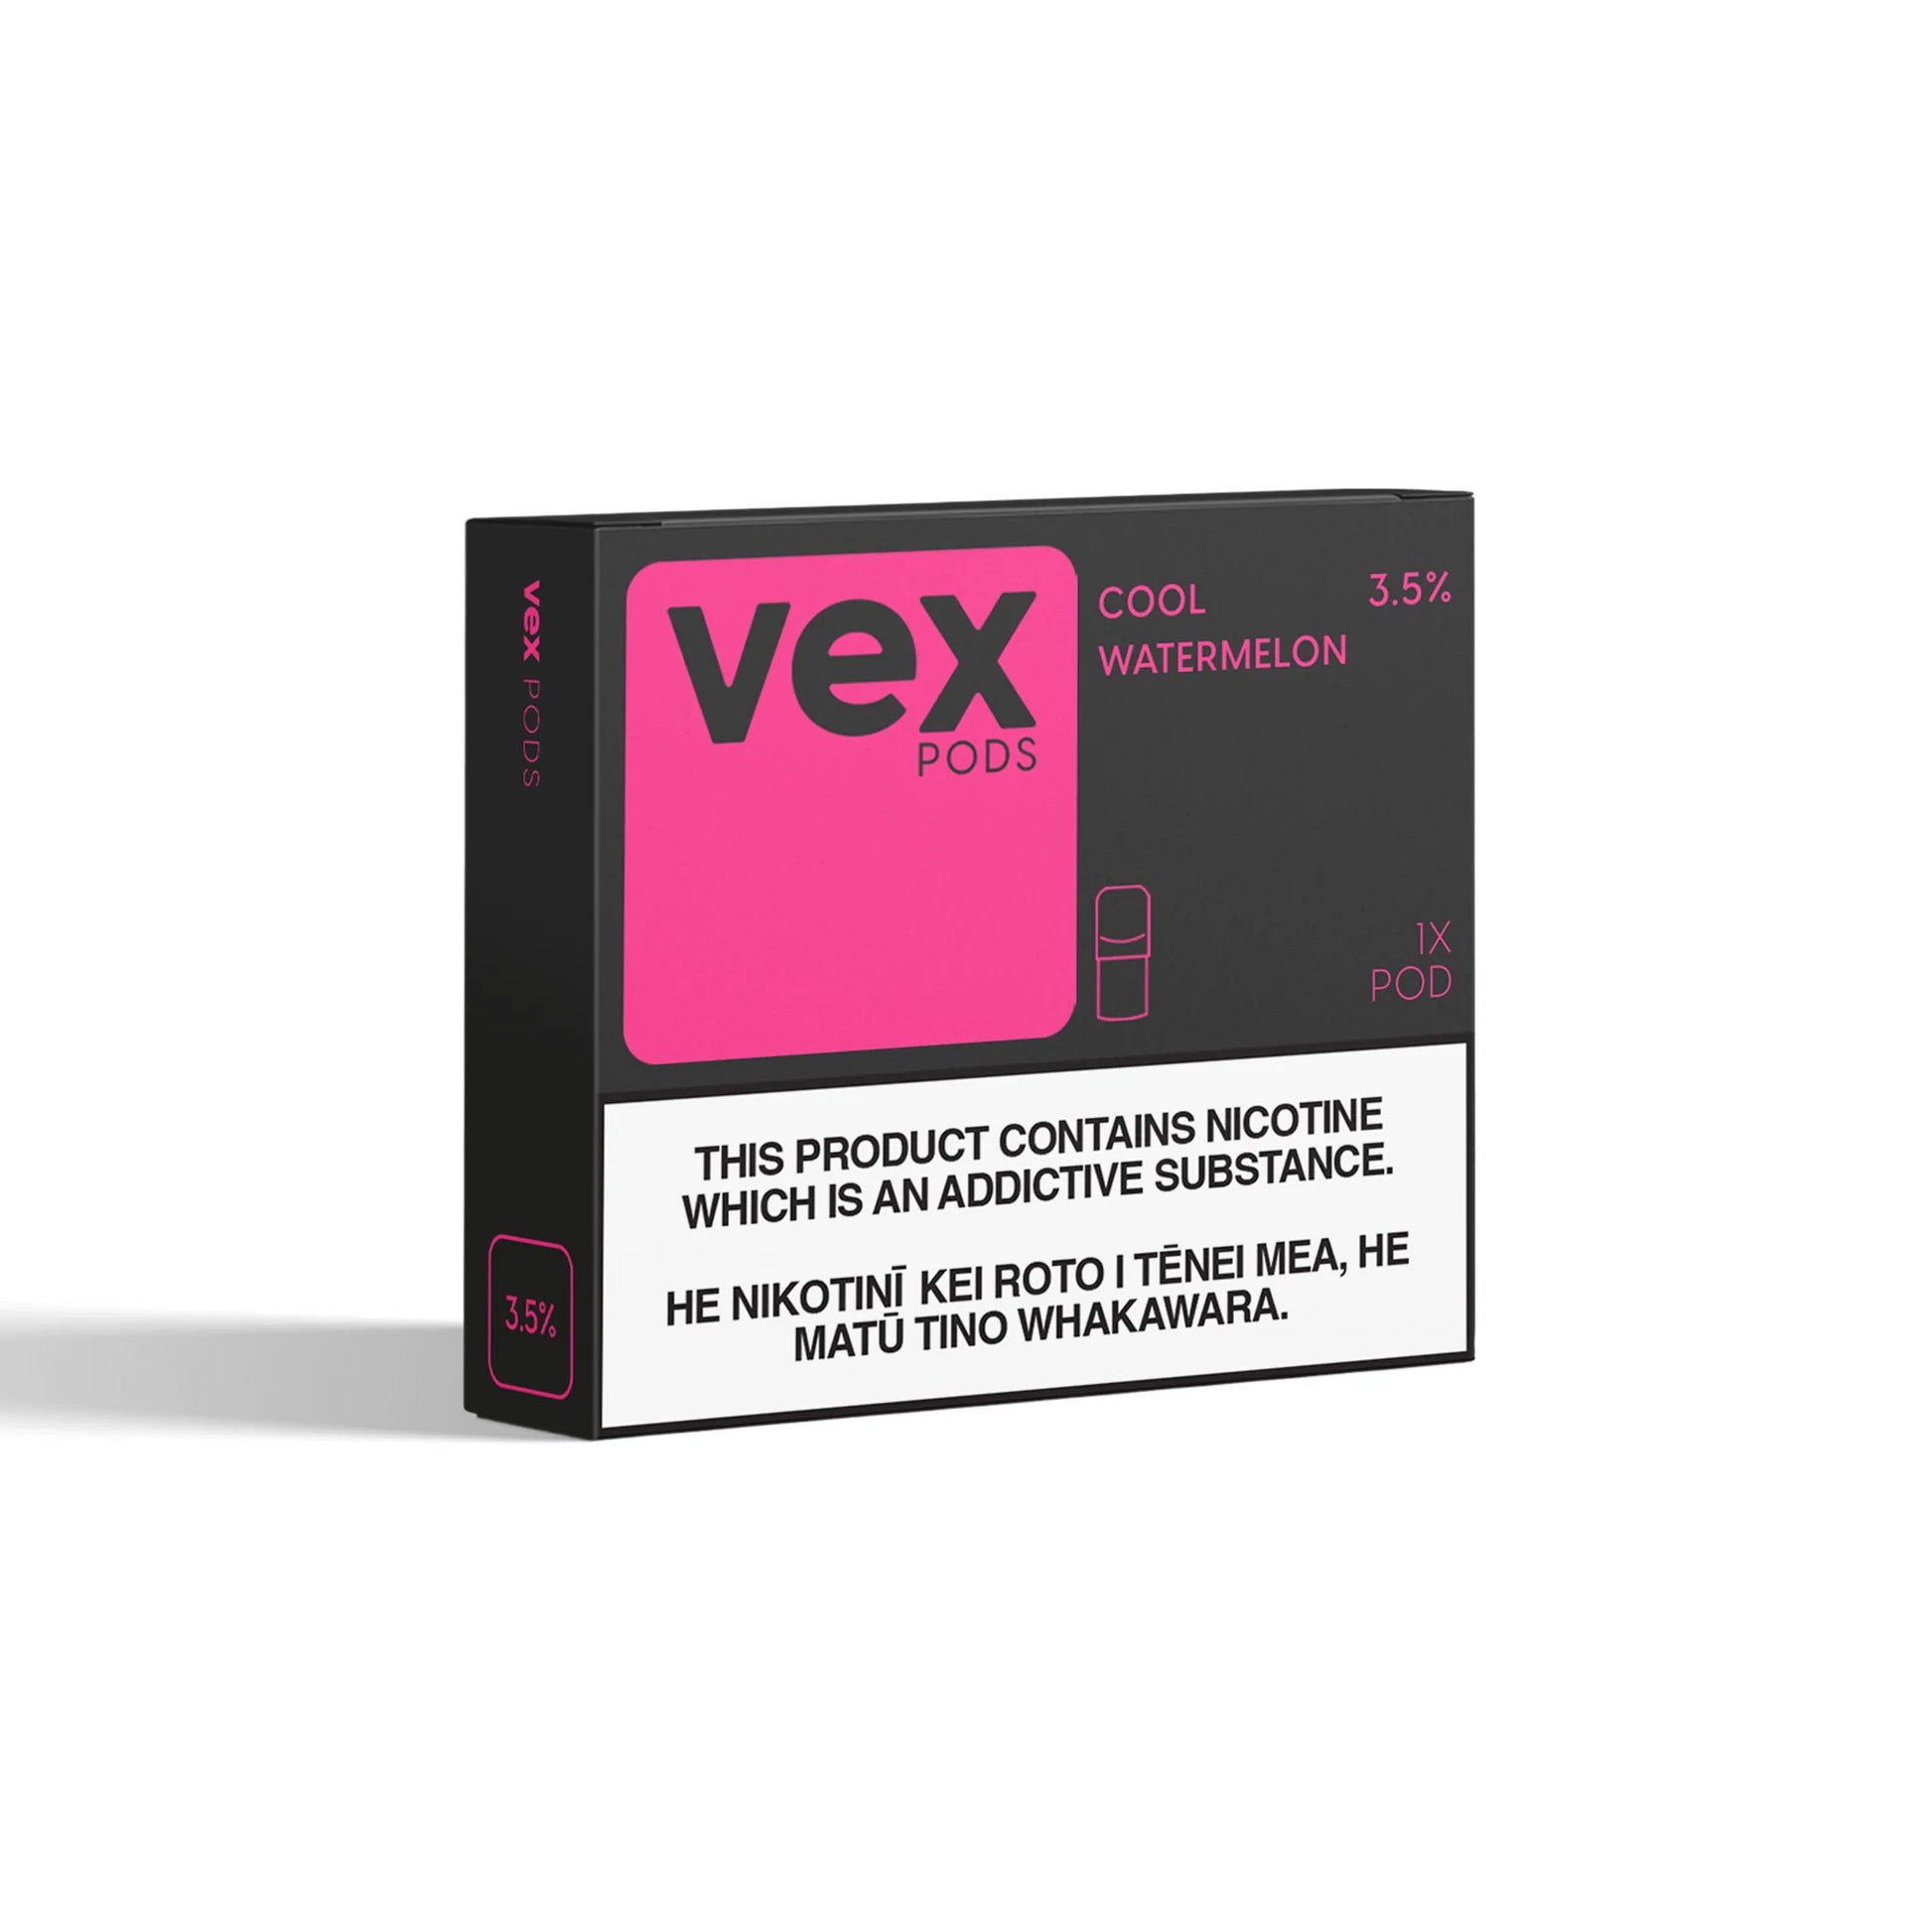 VEX - Cool Watermelon 3.5% - 2020 Vapes